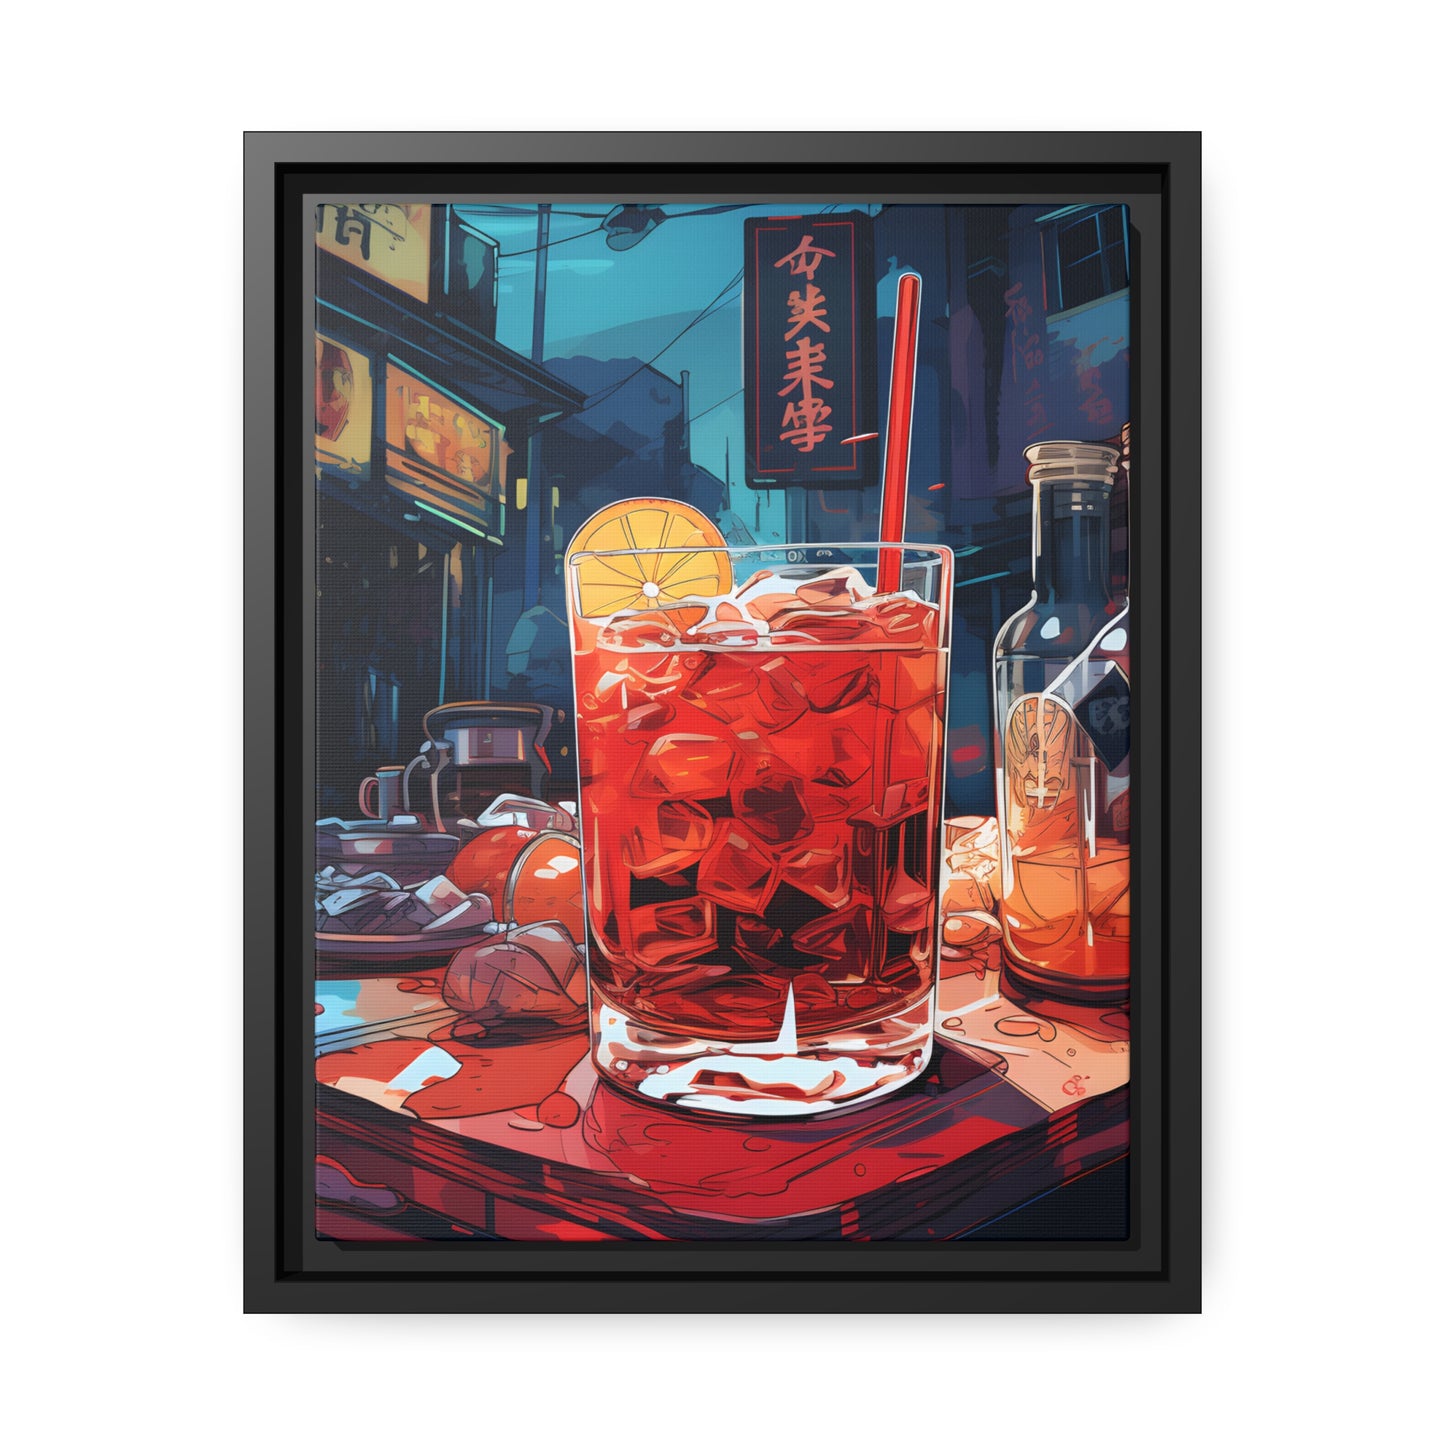 Framed Canvas Artwork Japanese Manga Style Alcohol And Night Life Bar Art Alcoholic Drink With Ice And Lemon Slice Floating Frame Canvas Neon Light Bar Artwork